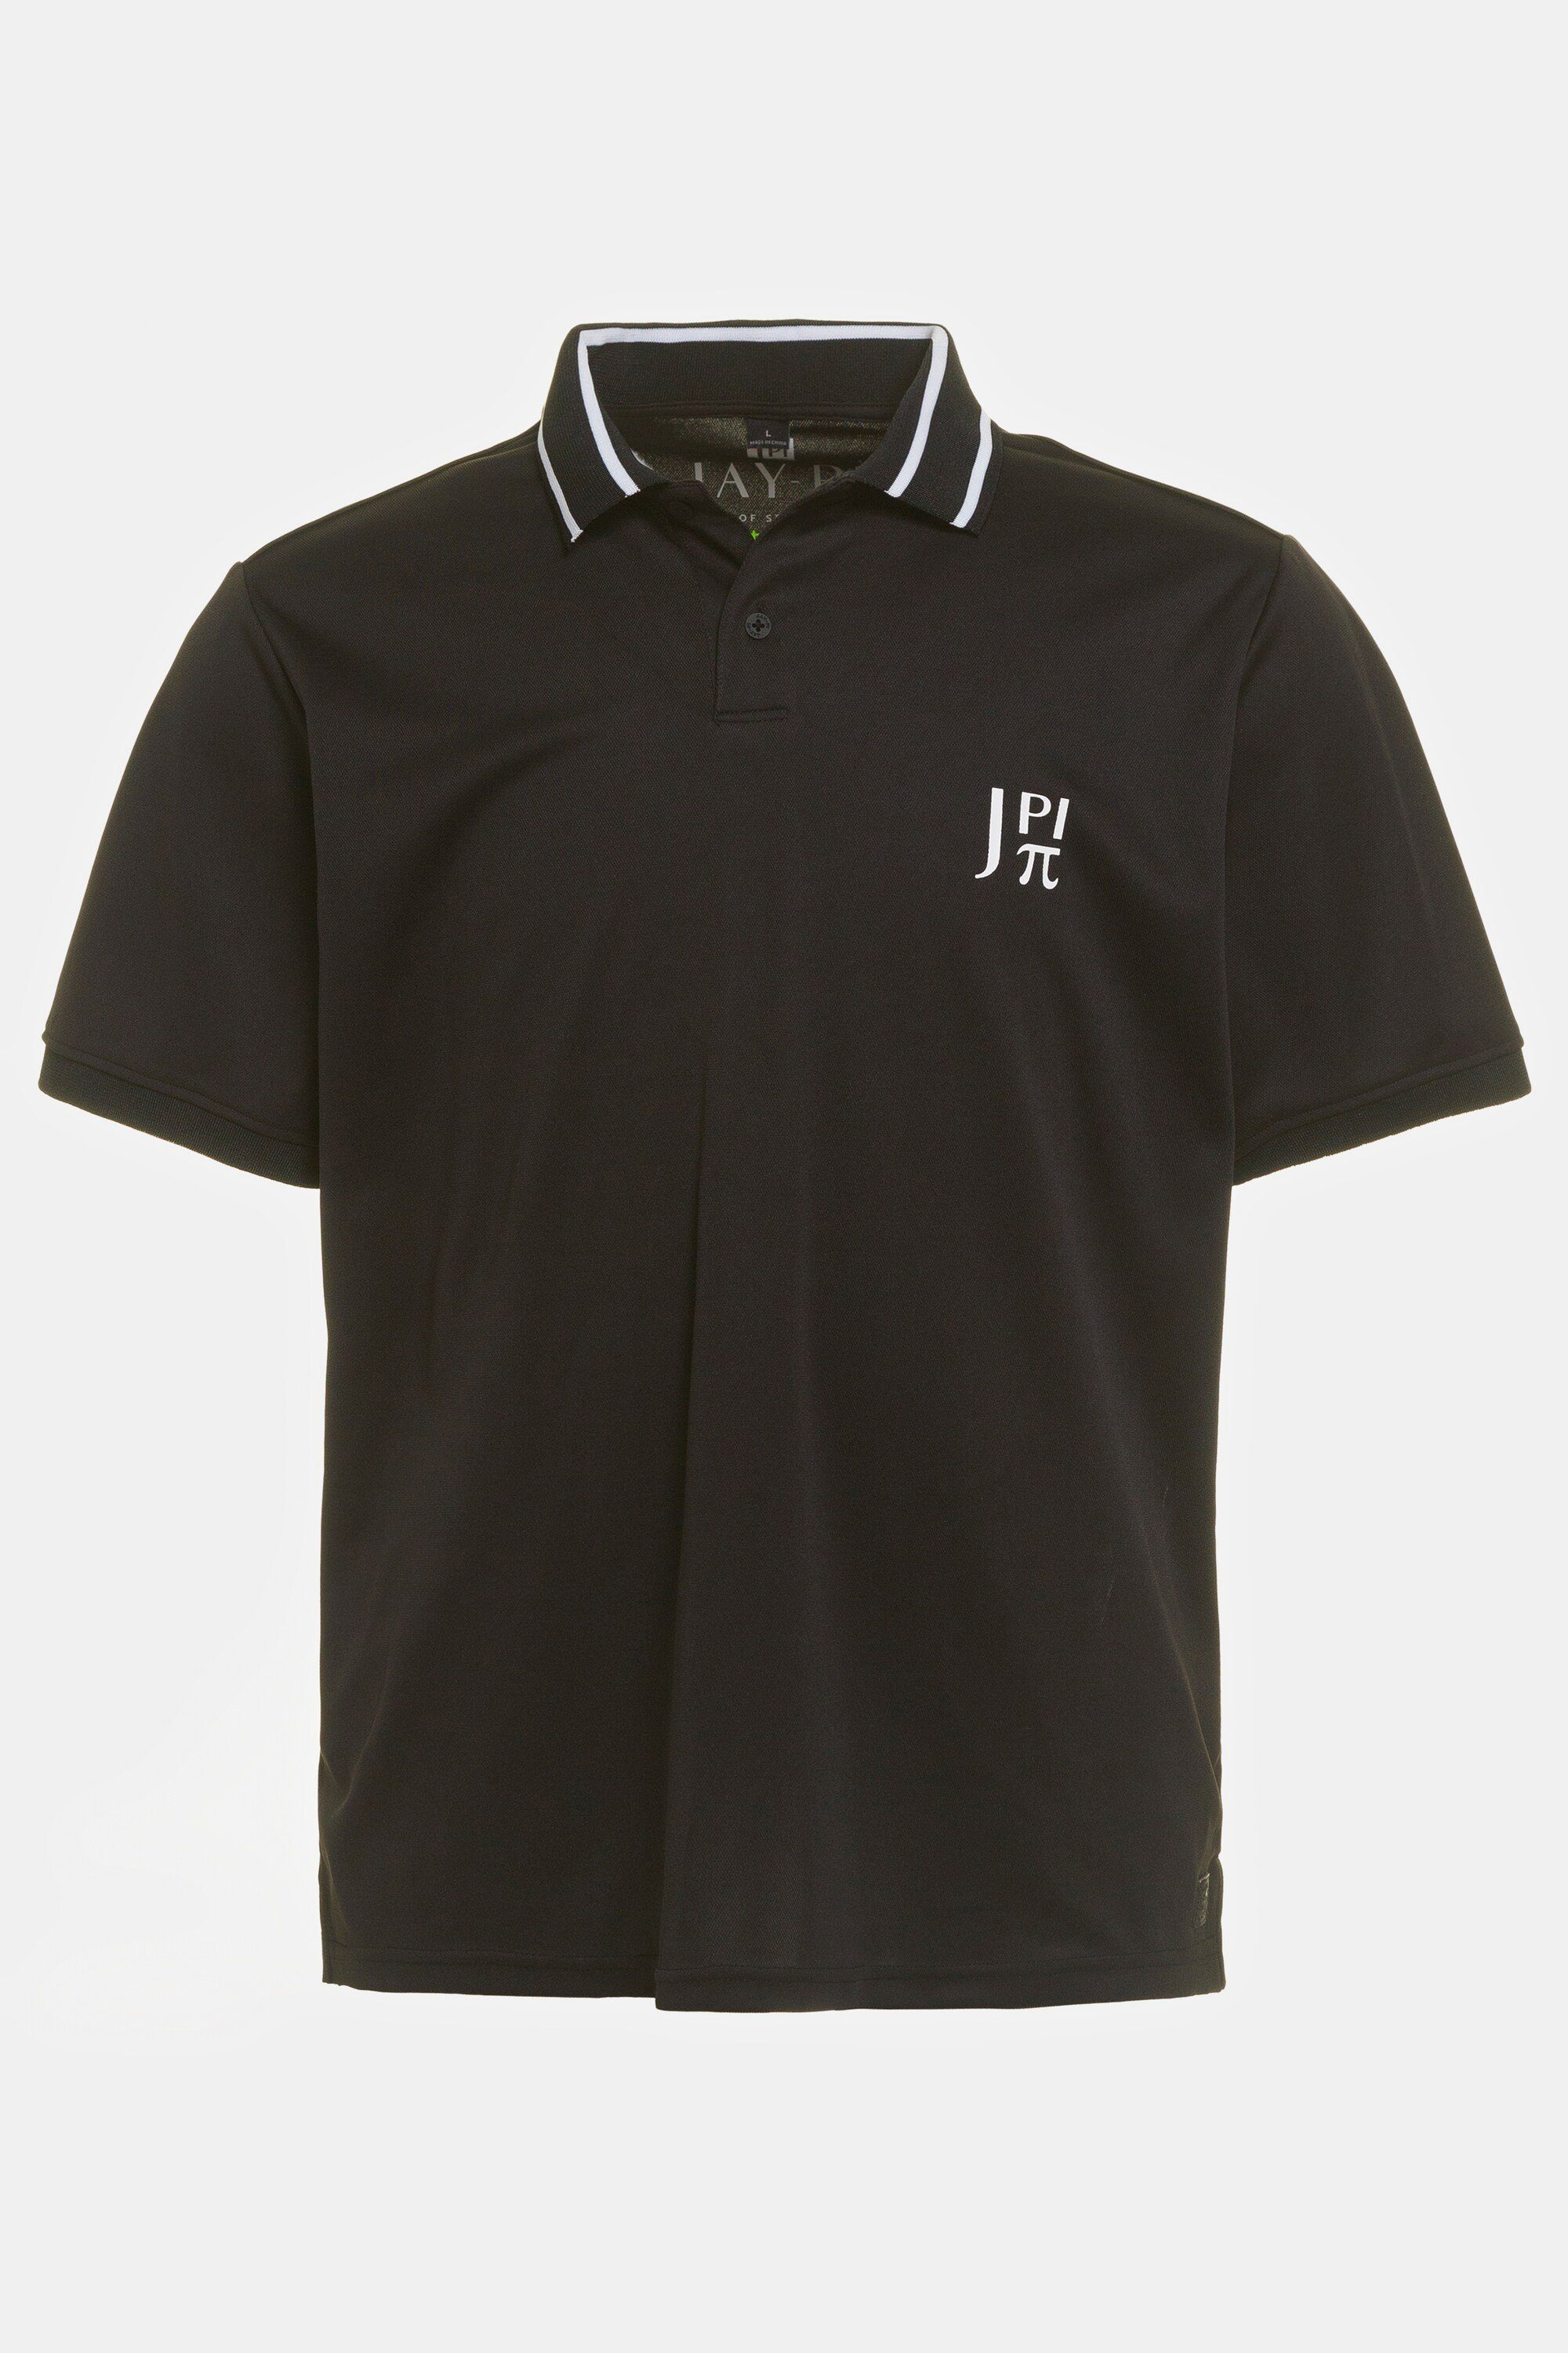 Poloshirt Halbarm atmungsaktiv ultraleicht JP1880 Poloshirt